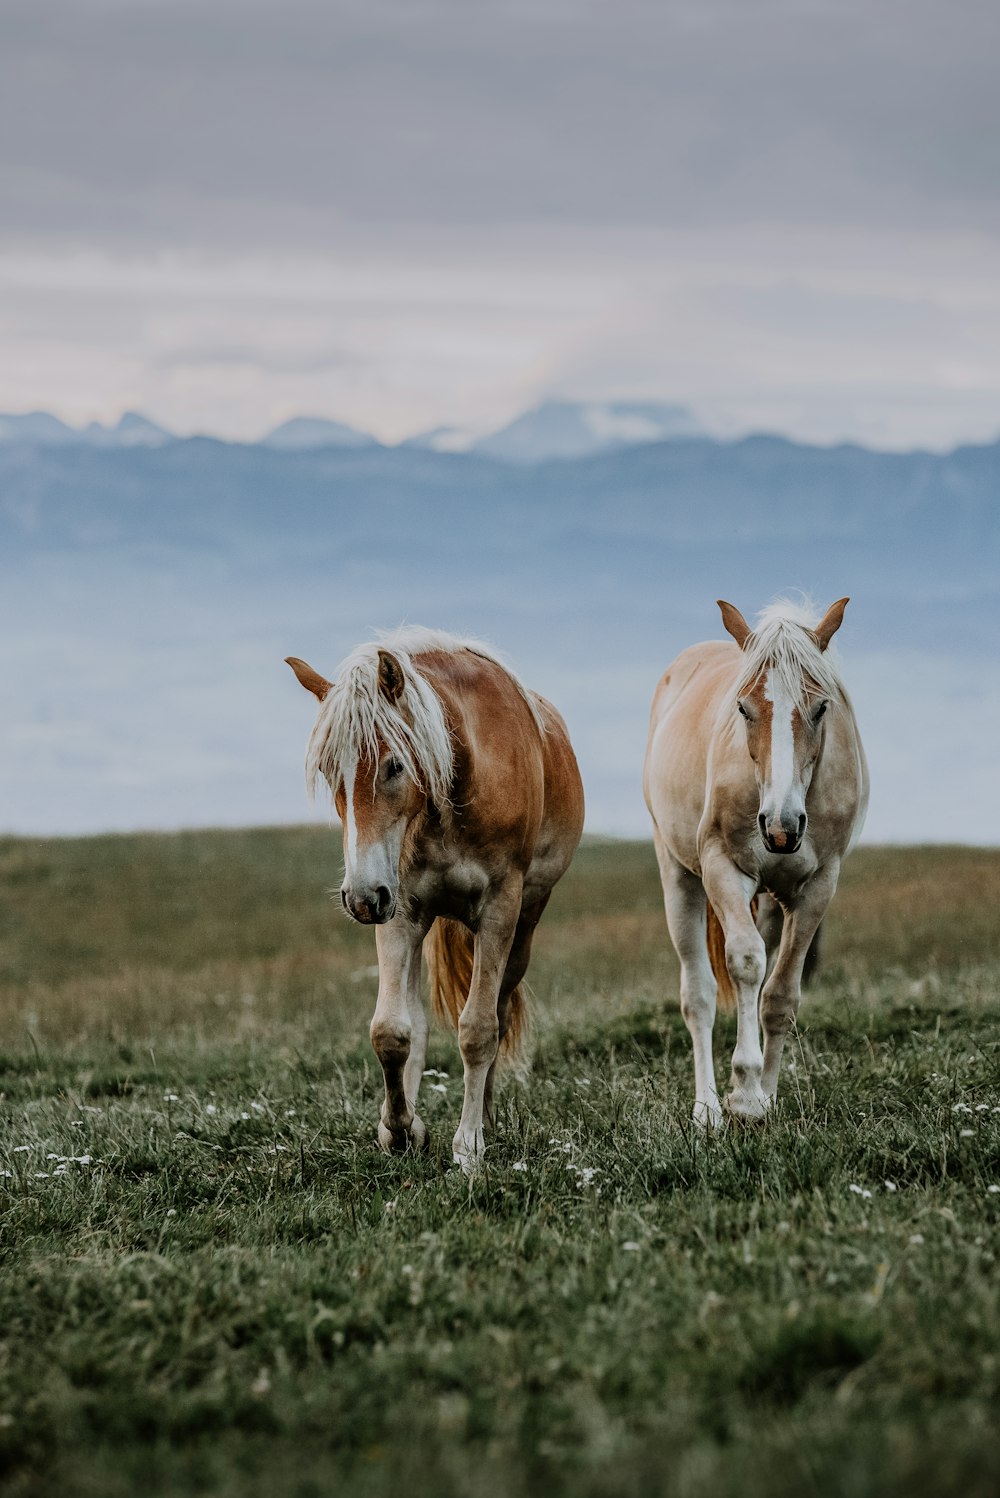 a couple of horses walking across a lush green field